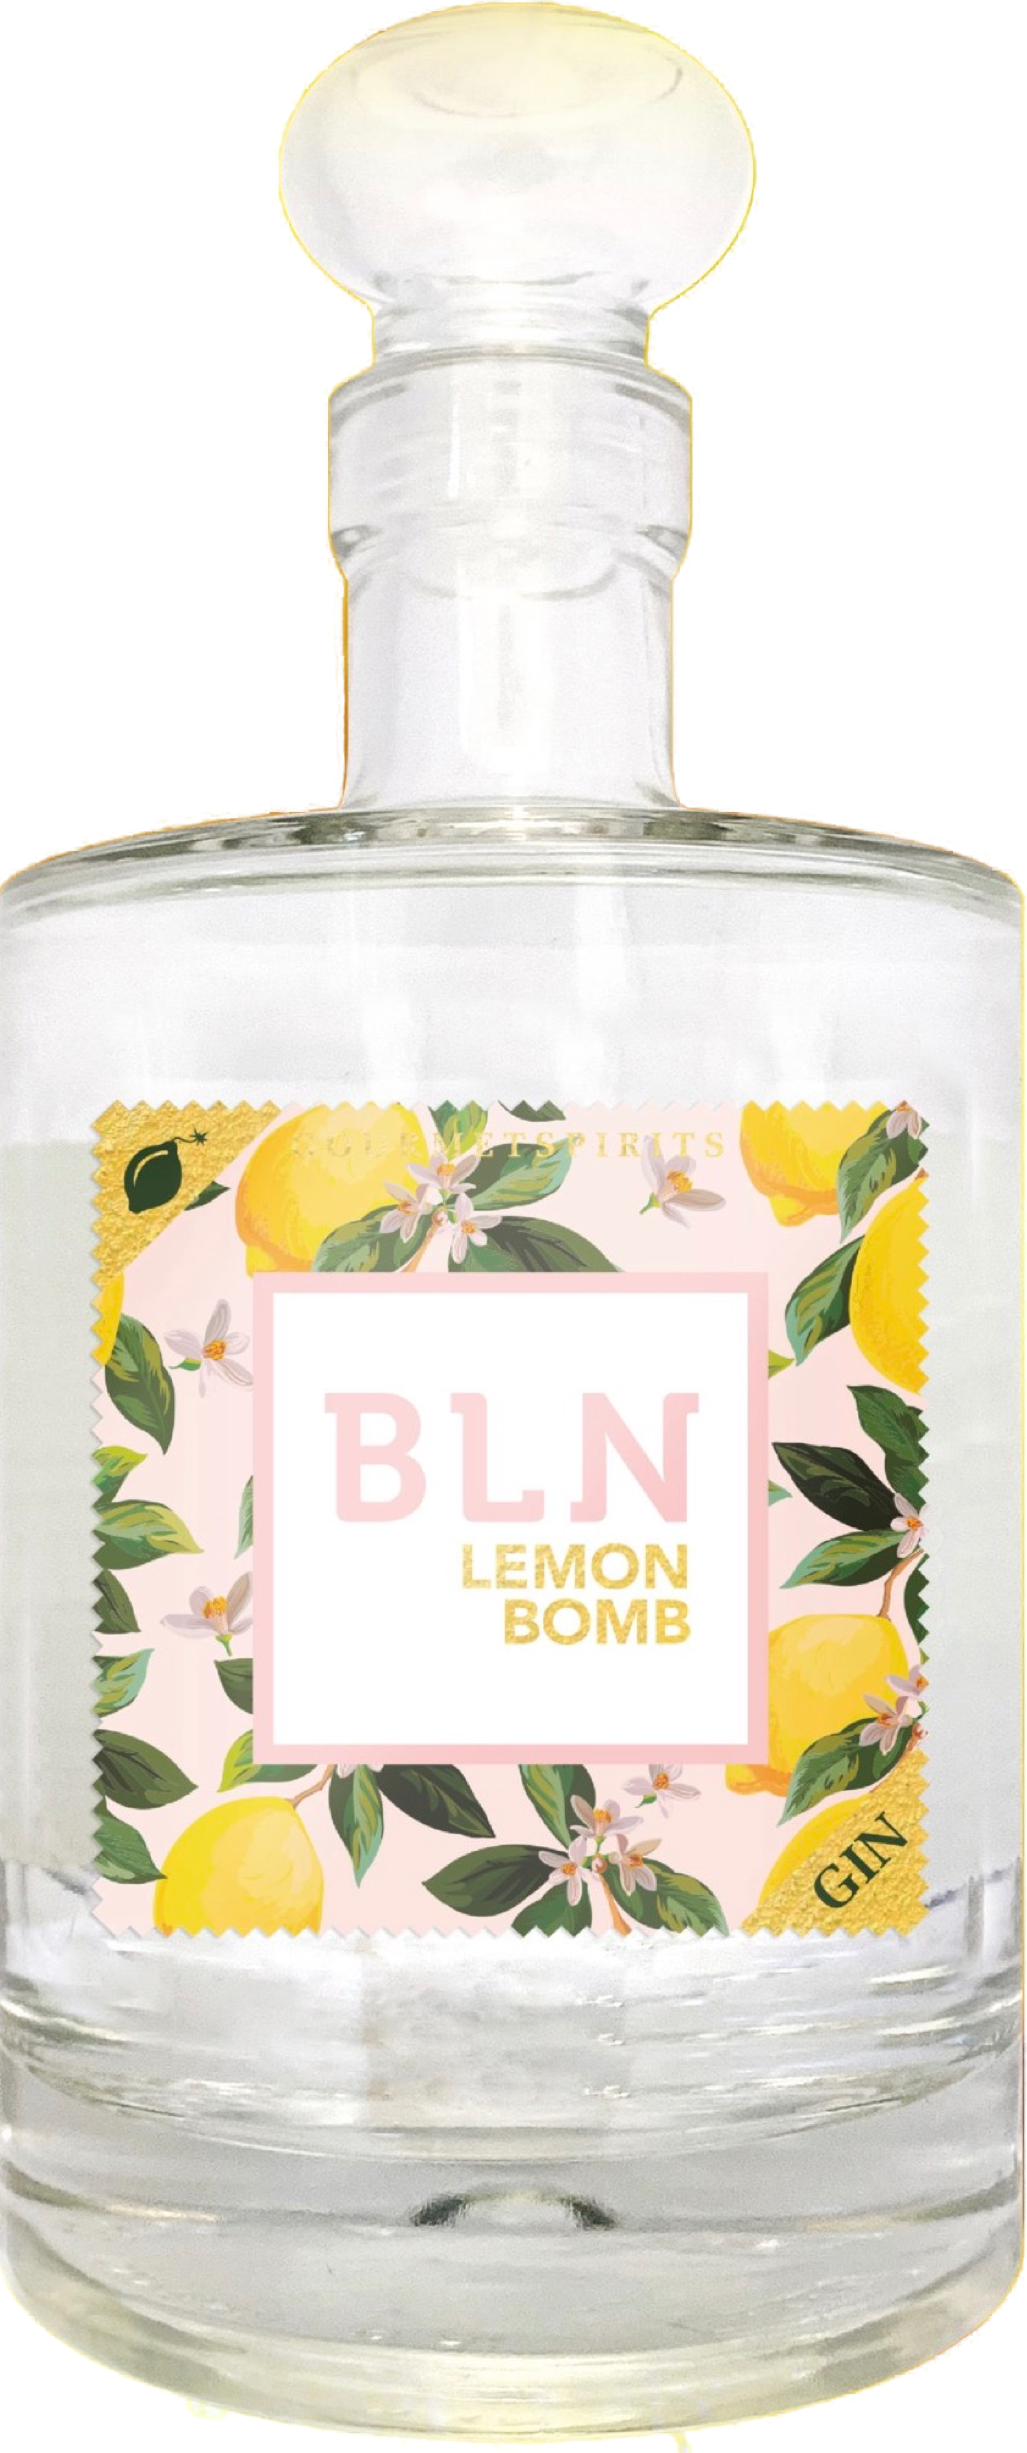 BLN Berlin Lemon Bomb Gin 41% vol. 0,5L